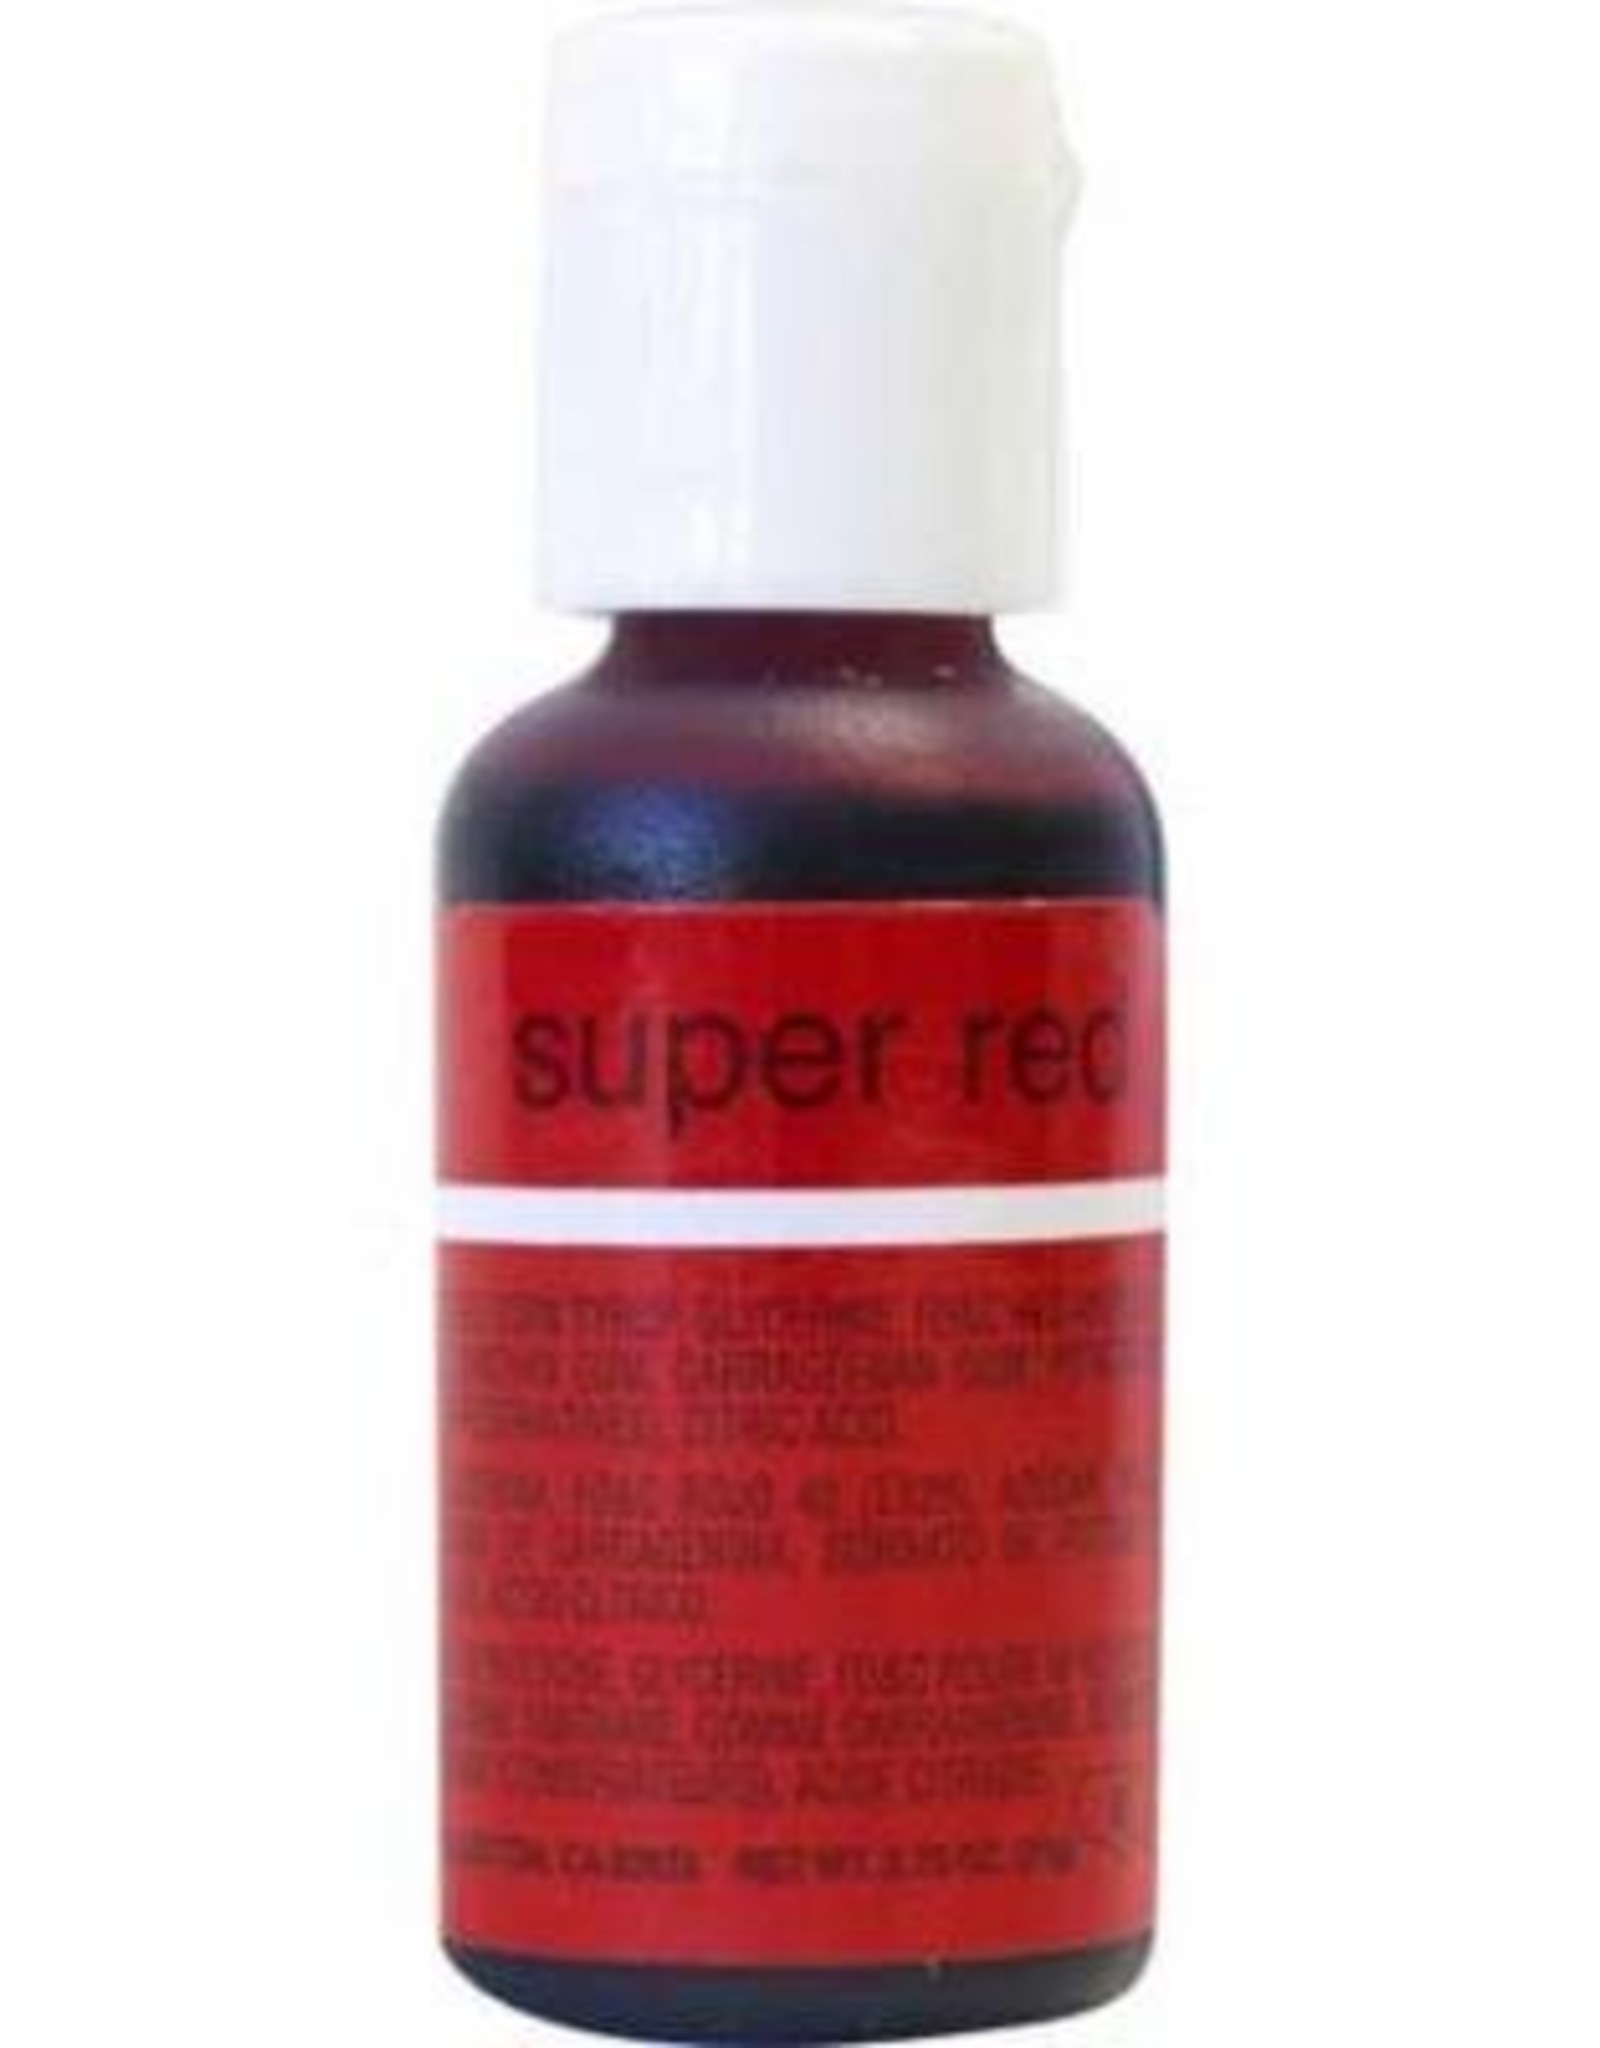 Super Red Chefmaster Liqua-gel 3/4 ounce